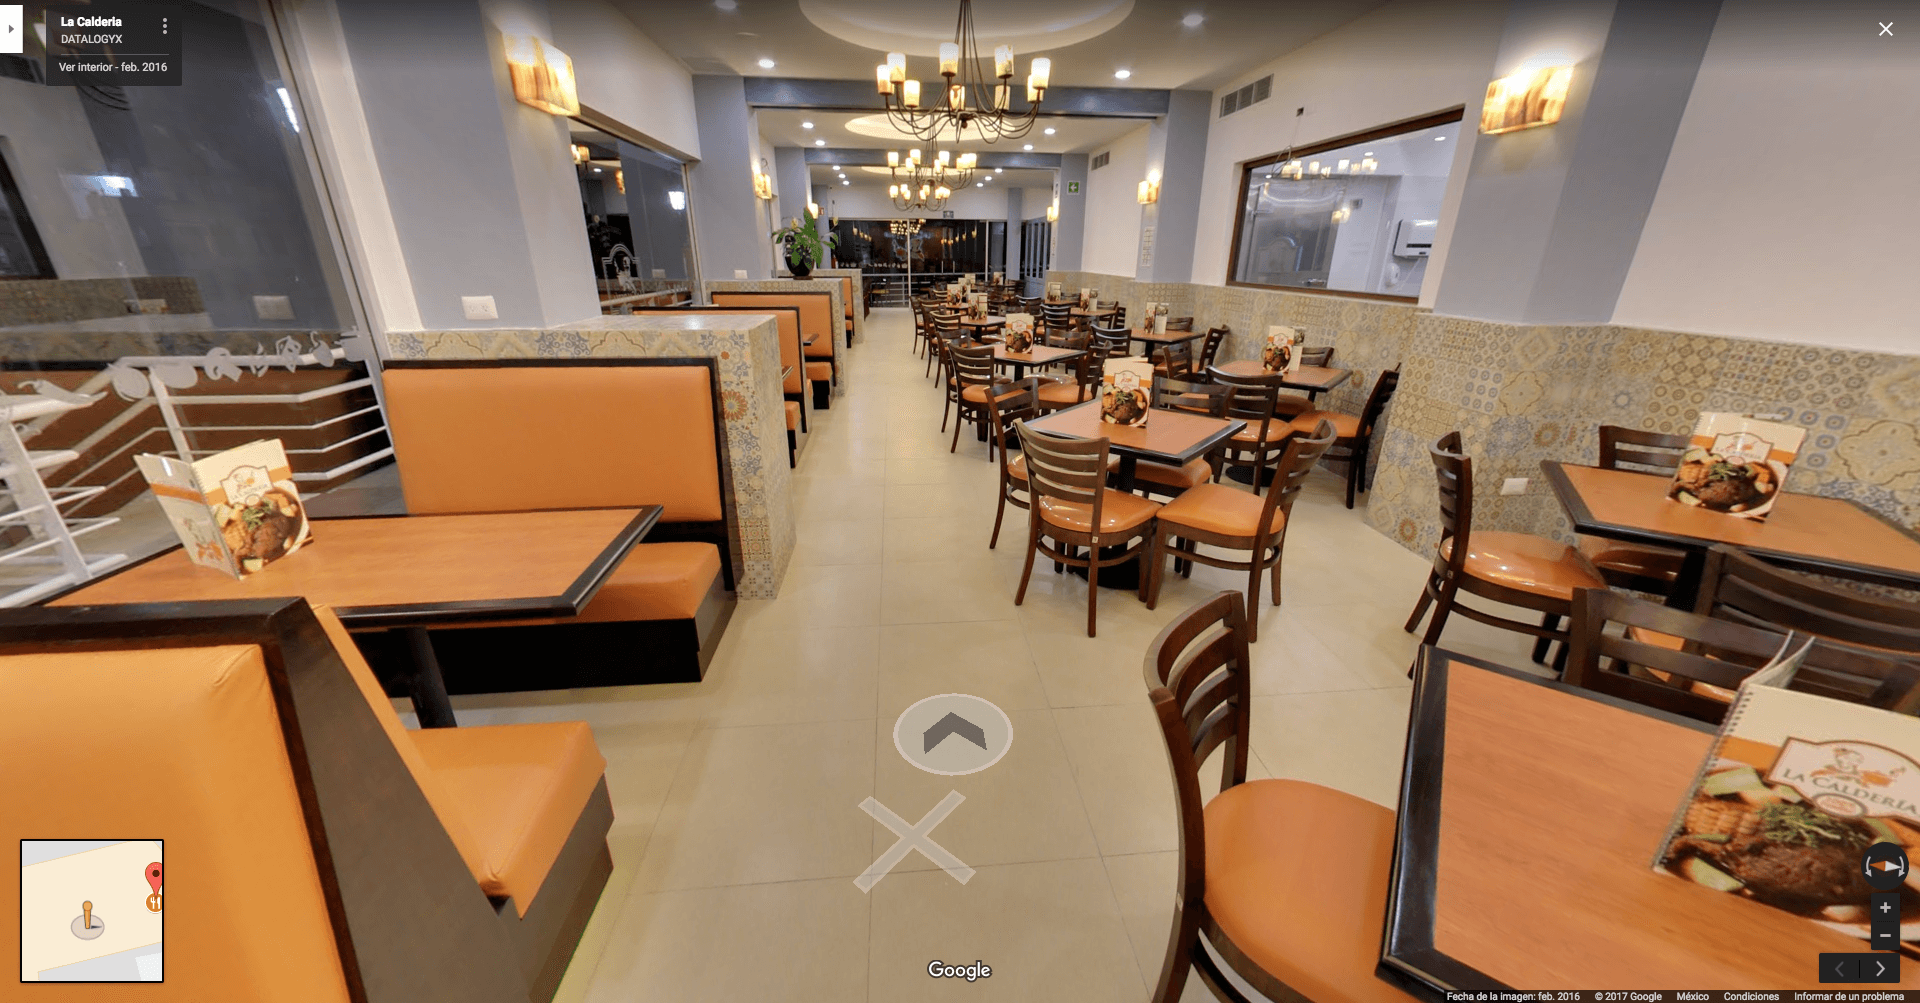 restaurant-elefanta-comida-mexico-recorrido-virtual-google-street-view-streetview-datalogyx